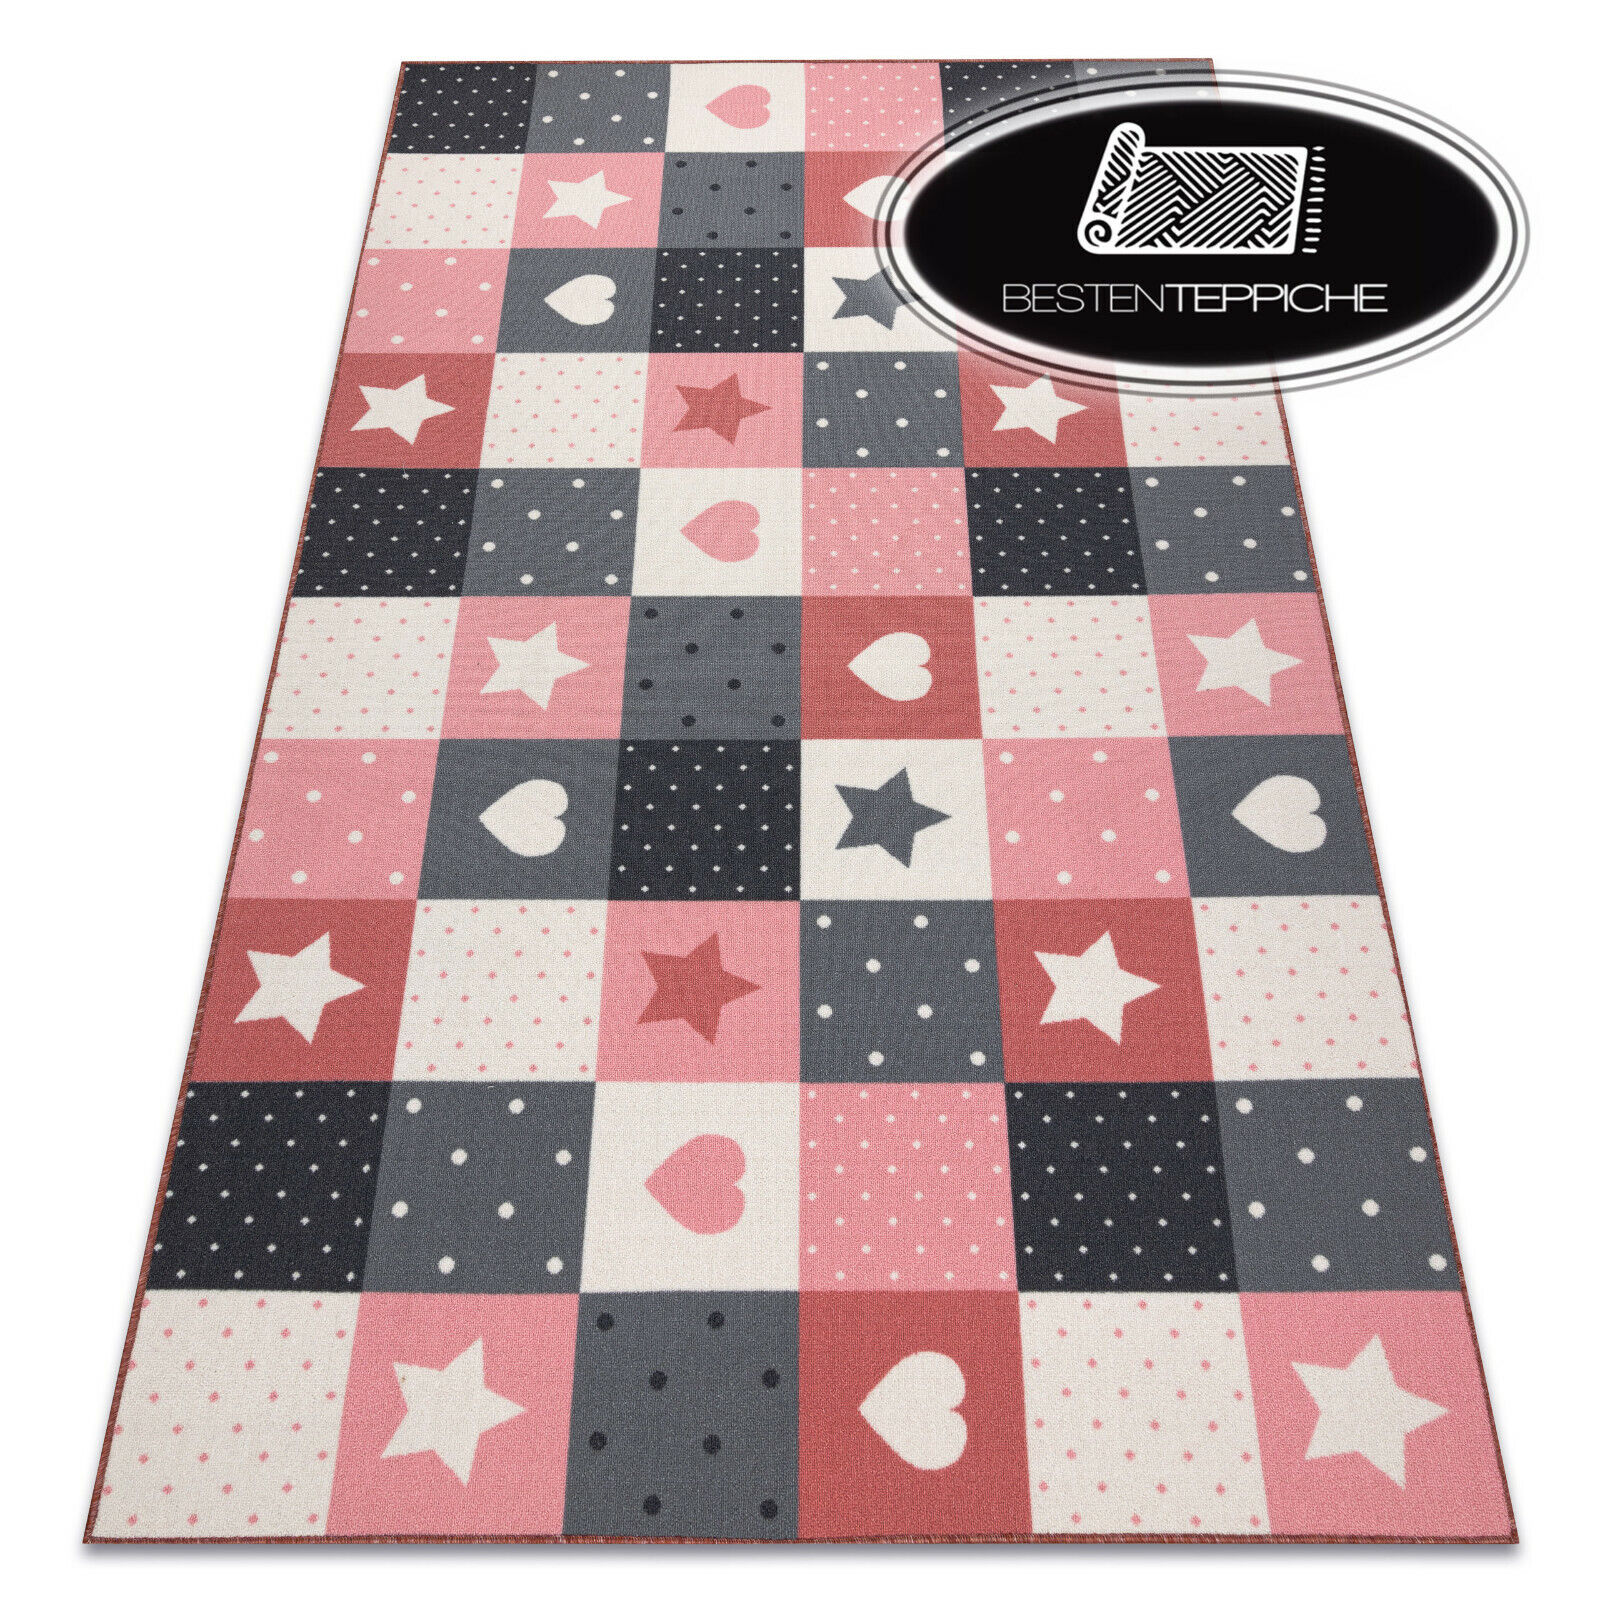 Modern Original Carpet Floor 'stars' Stars Pink/grey Rugs On Dimensions